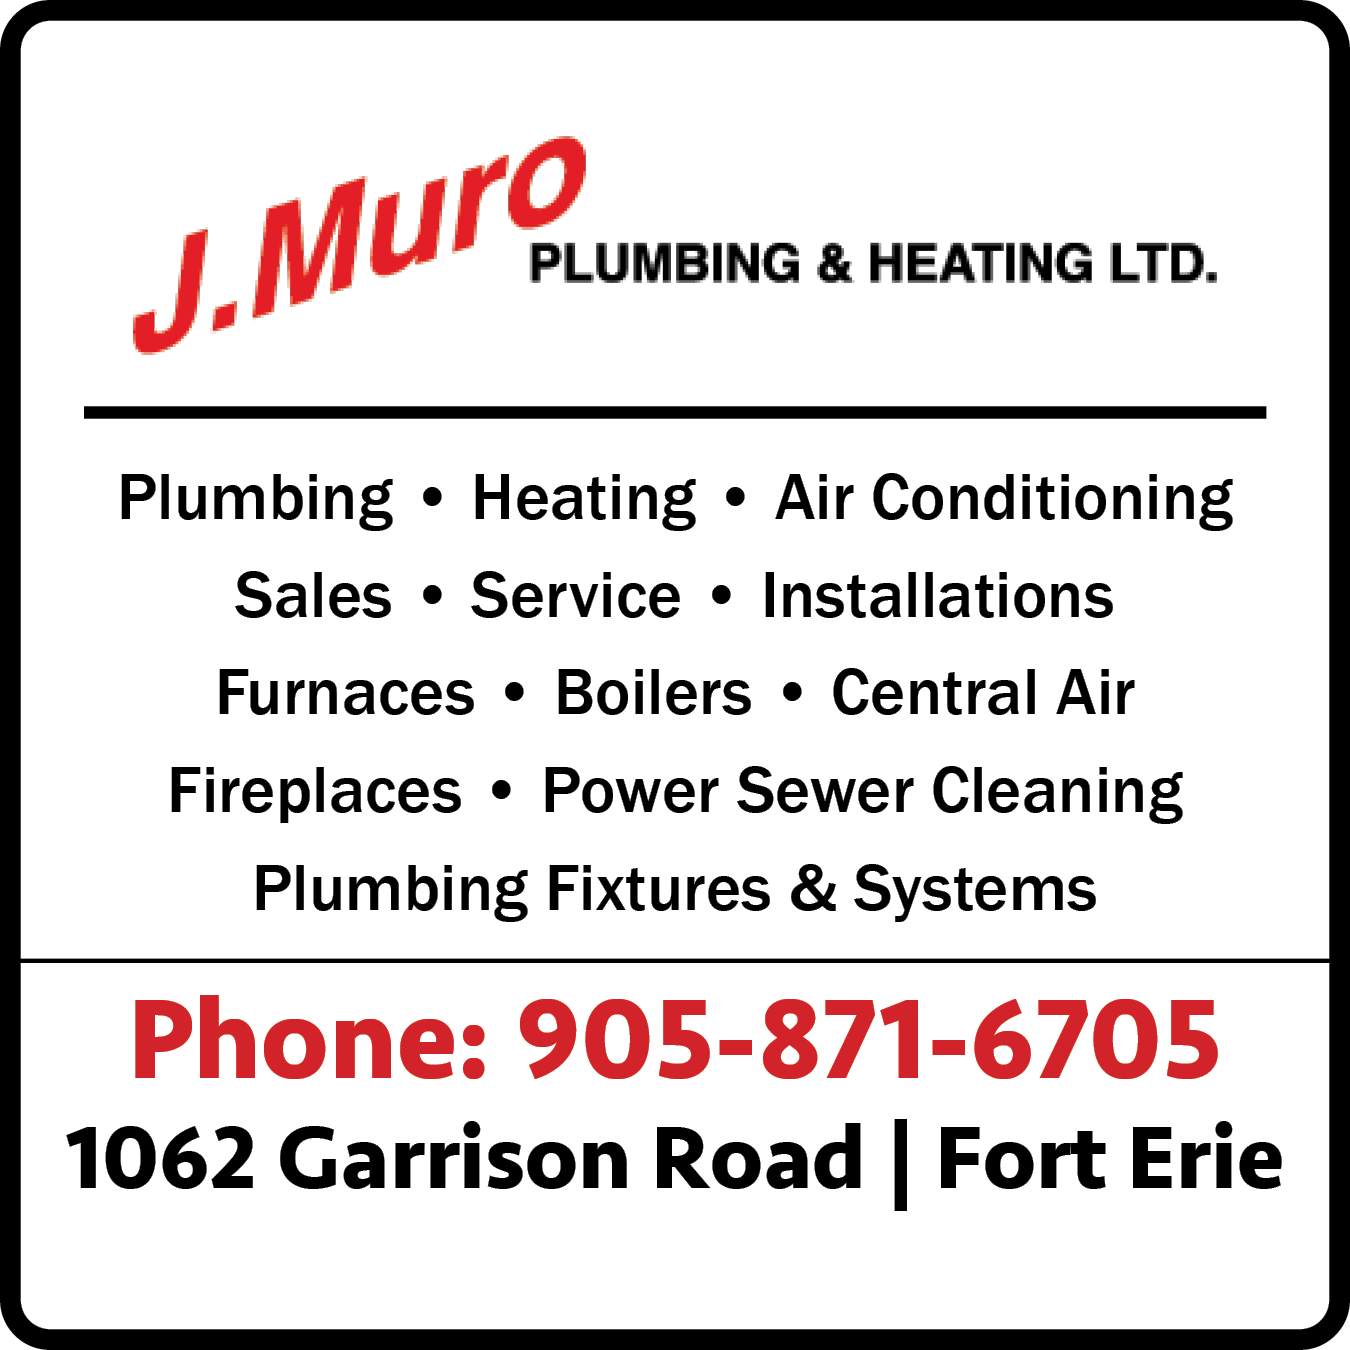 J. Muro Plumbing & Heating Ltd